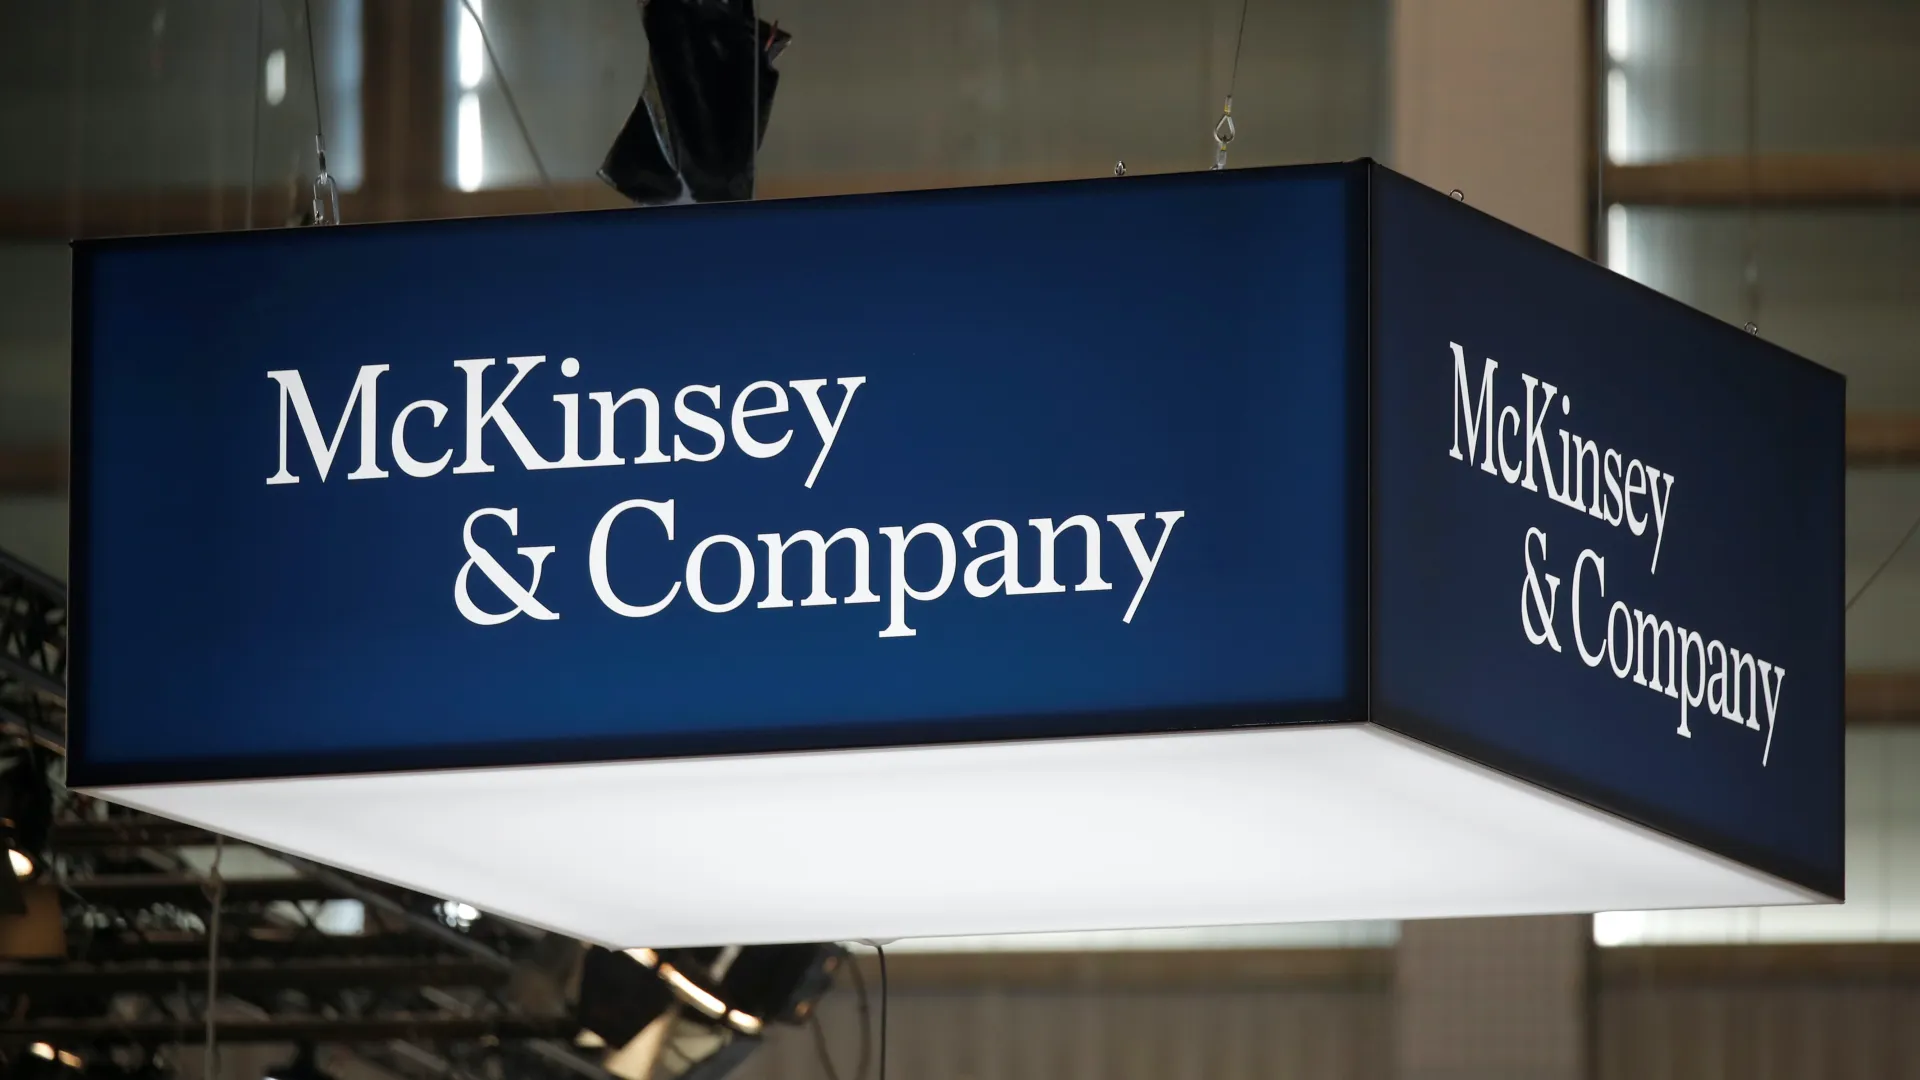 Former McKinsey partner accuses the firm of misleading Congress (Credits: Al Jazeera)